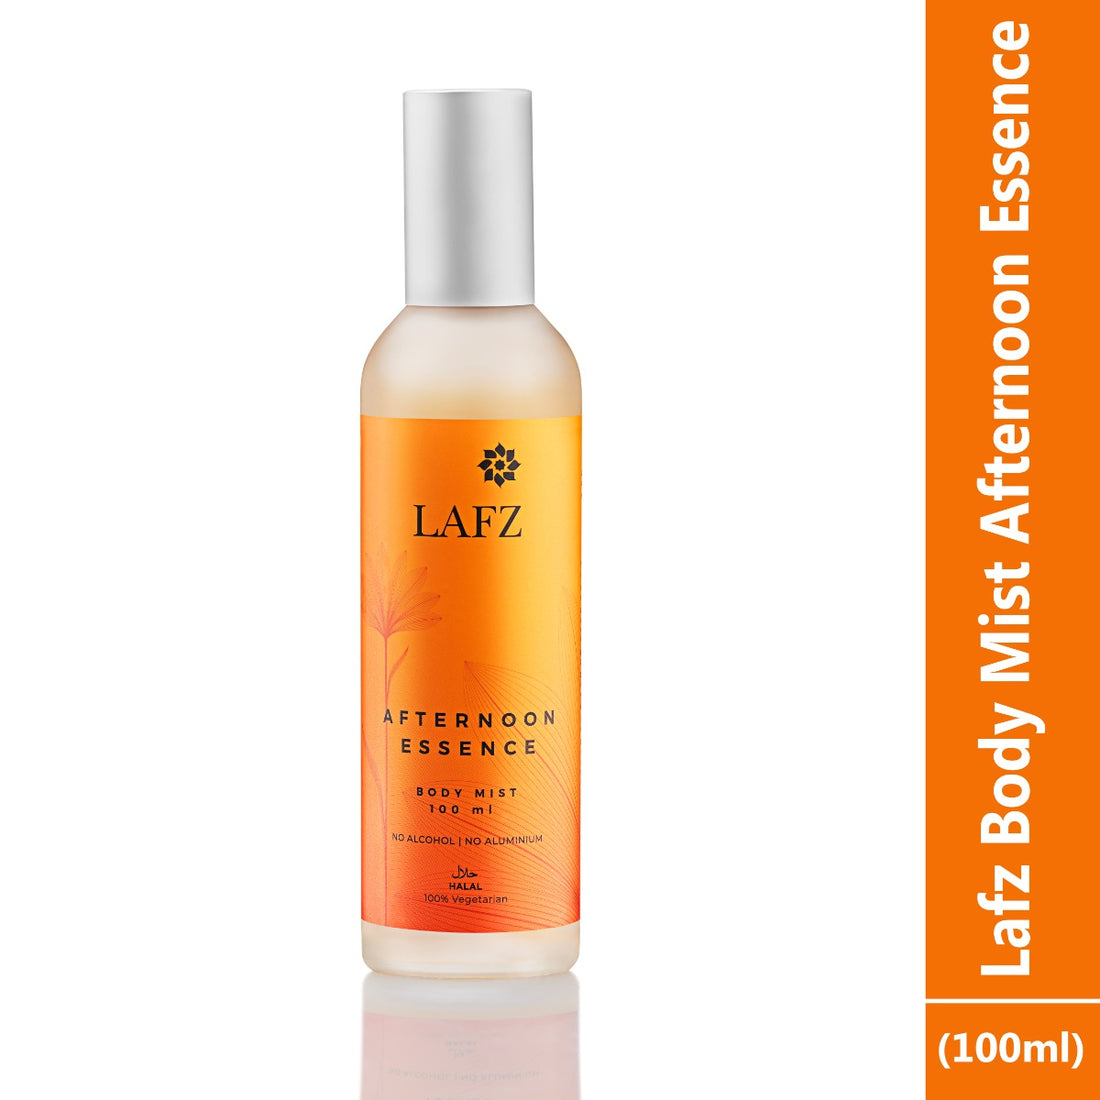 Lafz Body Mist Afternoon Essence (100ml)- Alcohol Free